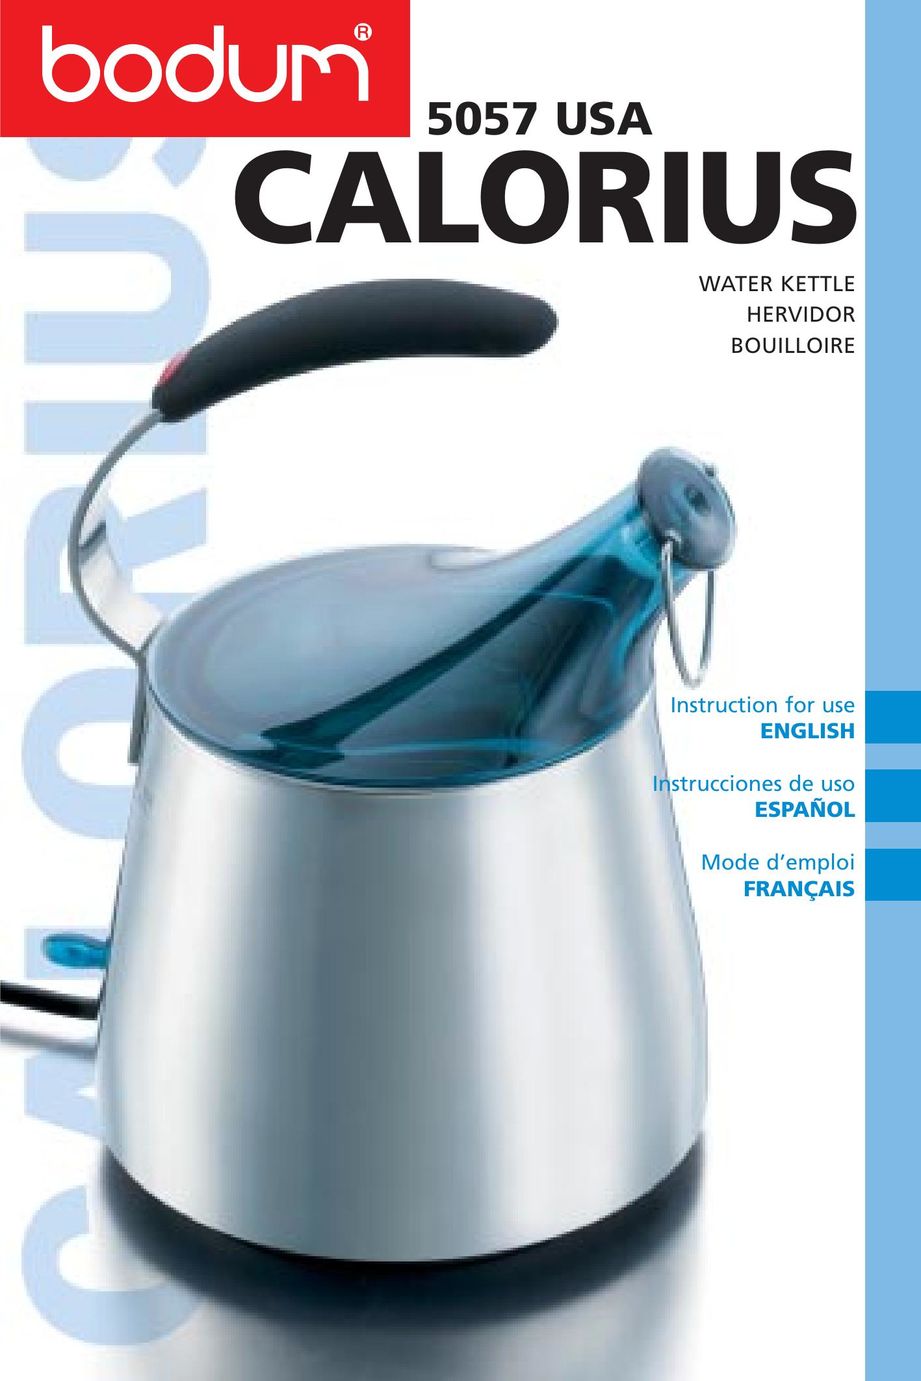 Bodum 5057 Hot Beverage Maker User Manual